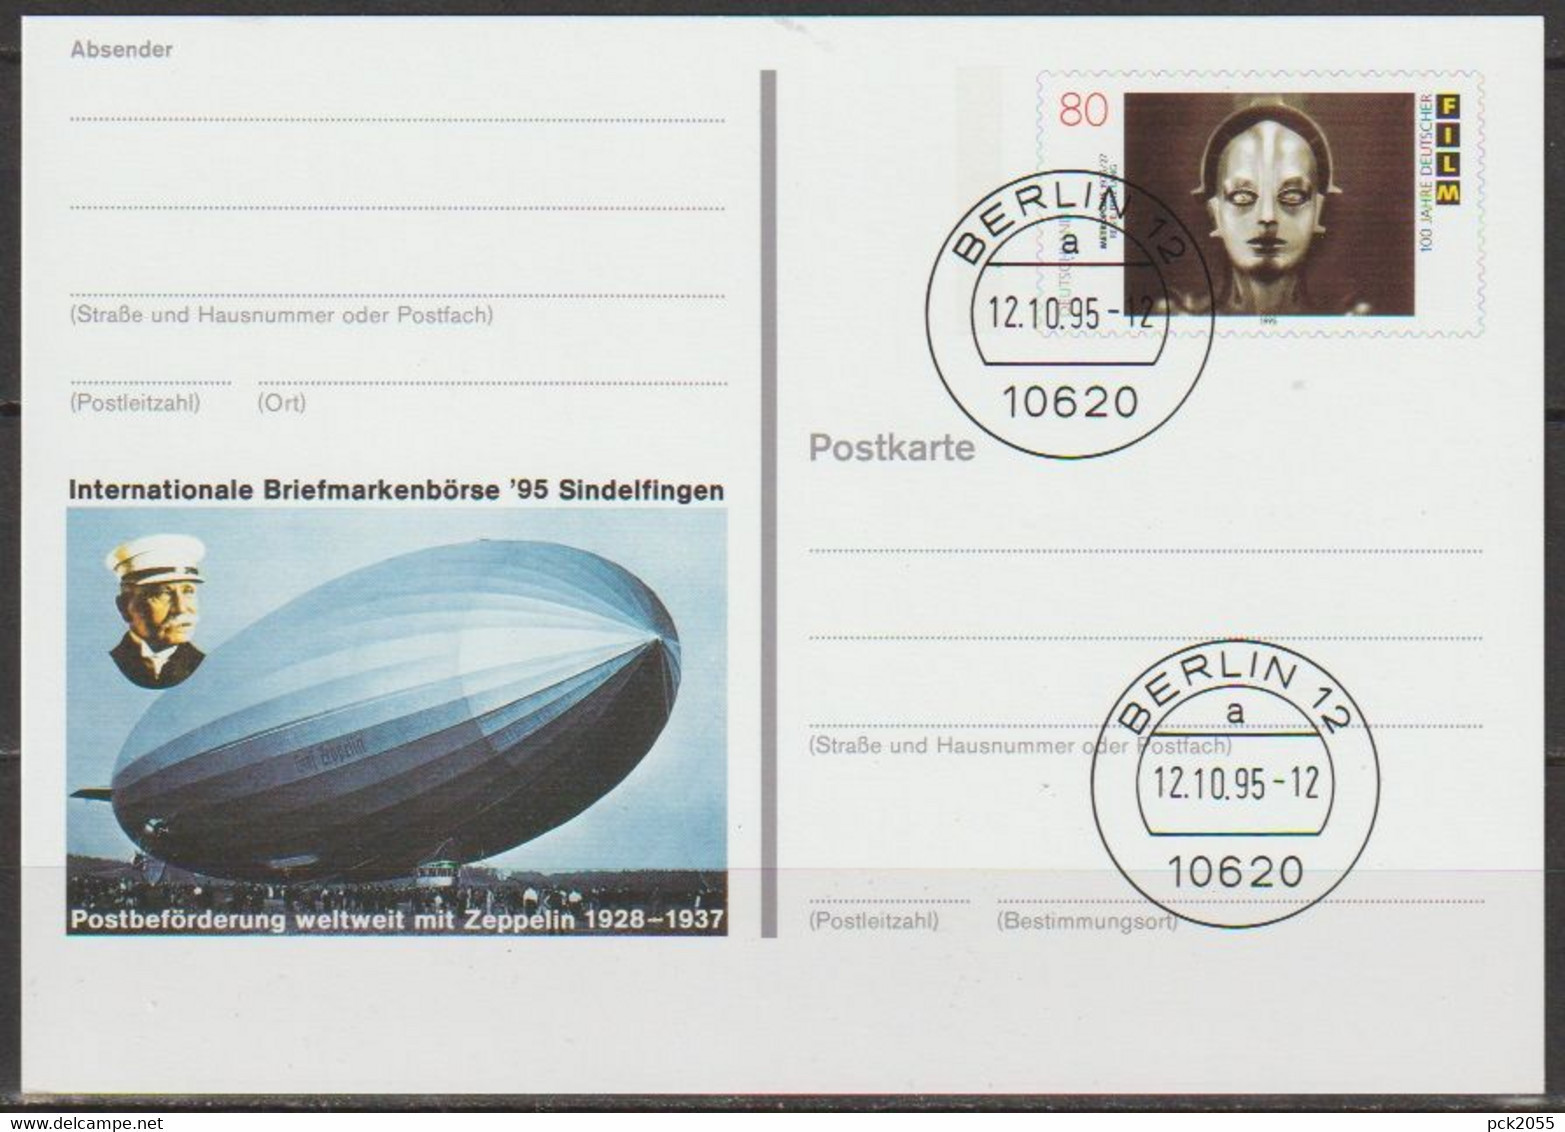 BRD Ganzsache 1995 PSo40 Briefmarkenbörse Sindelfingen Ersttagsstempel 12.10.95 Berlin  (d372)günstige Versandkosten - Postkaarten - Gebruikt